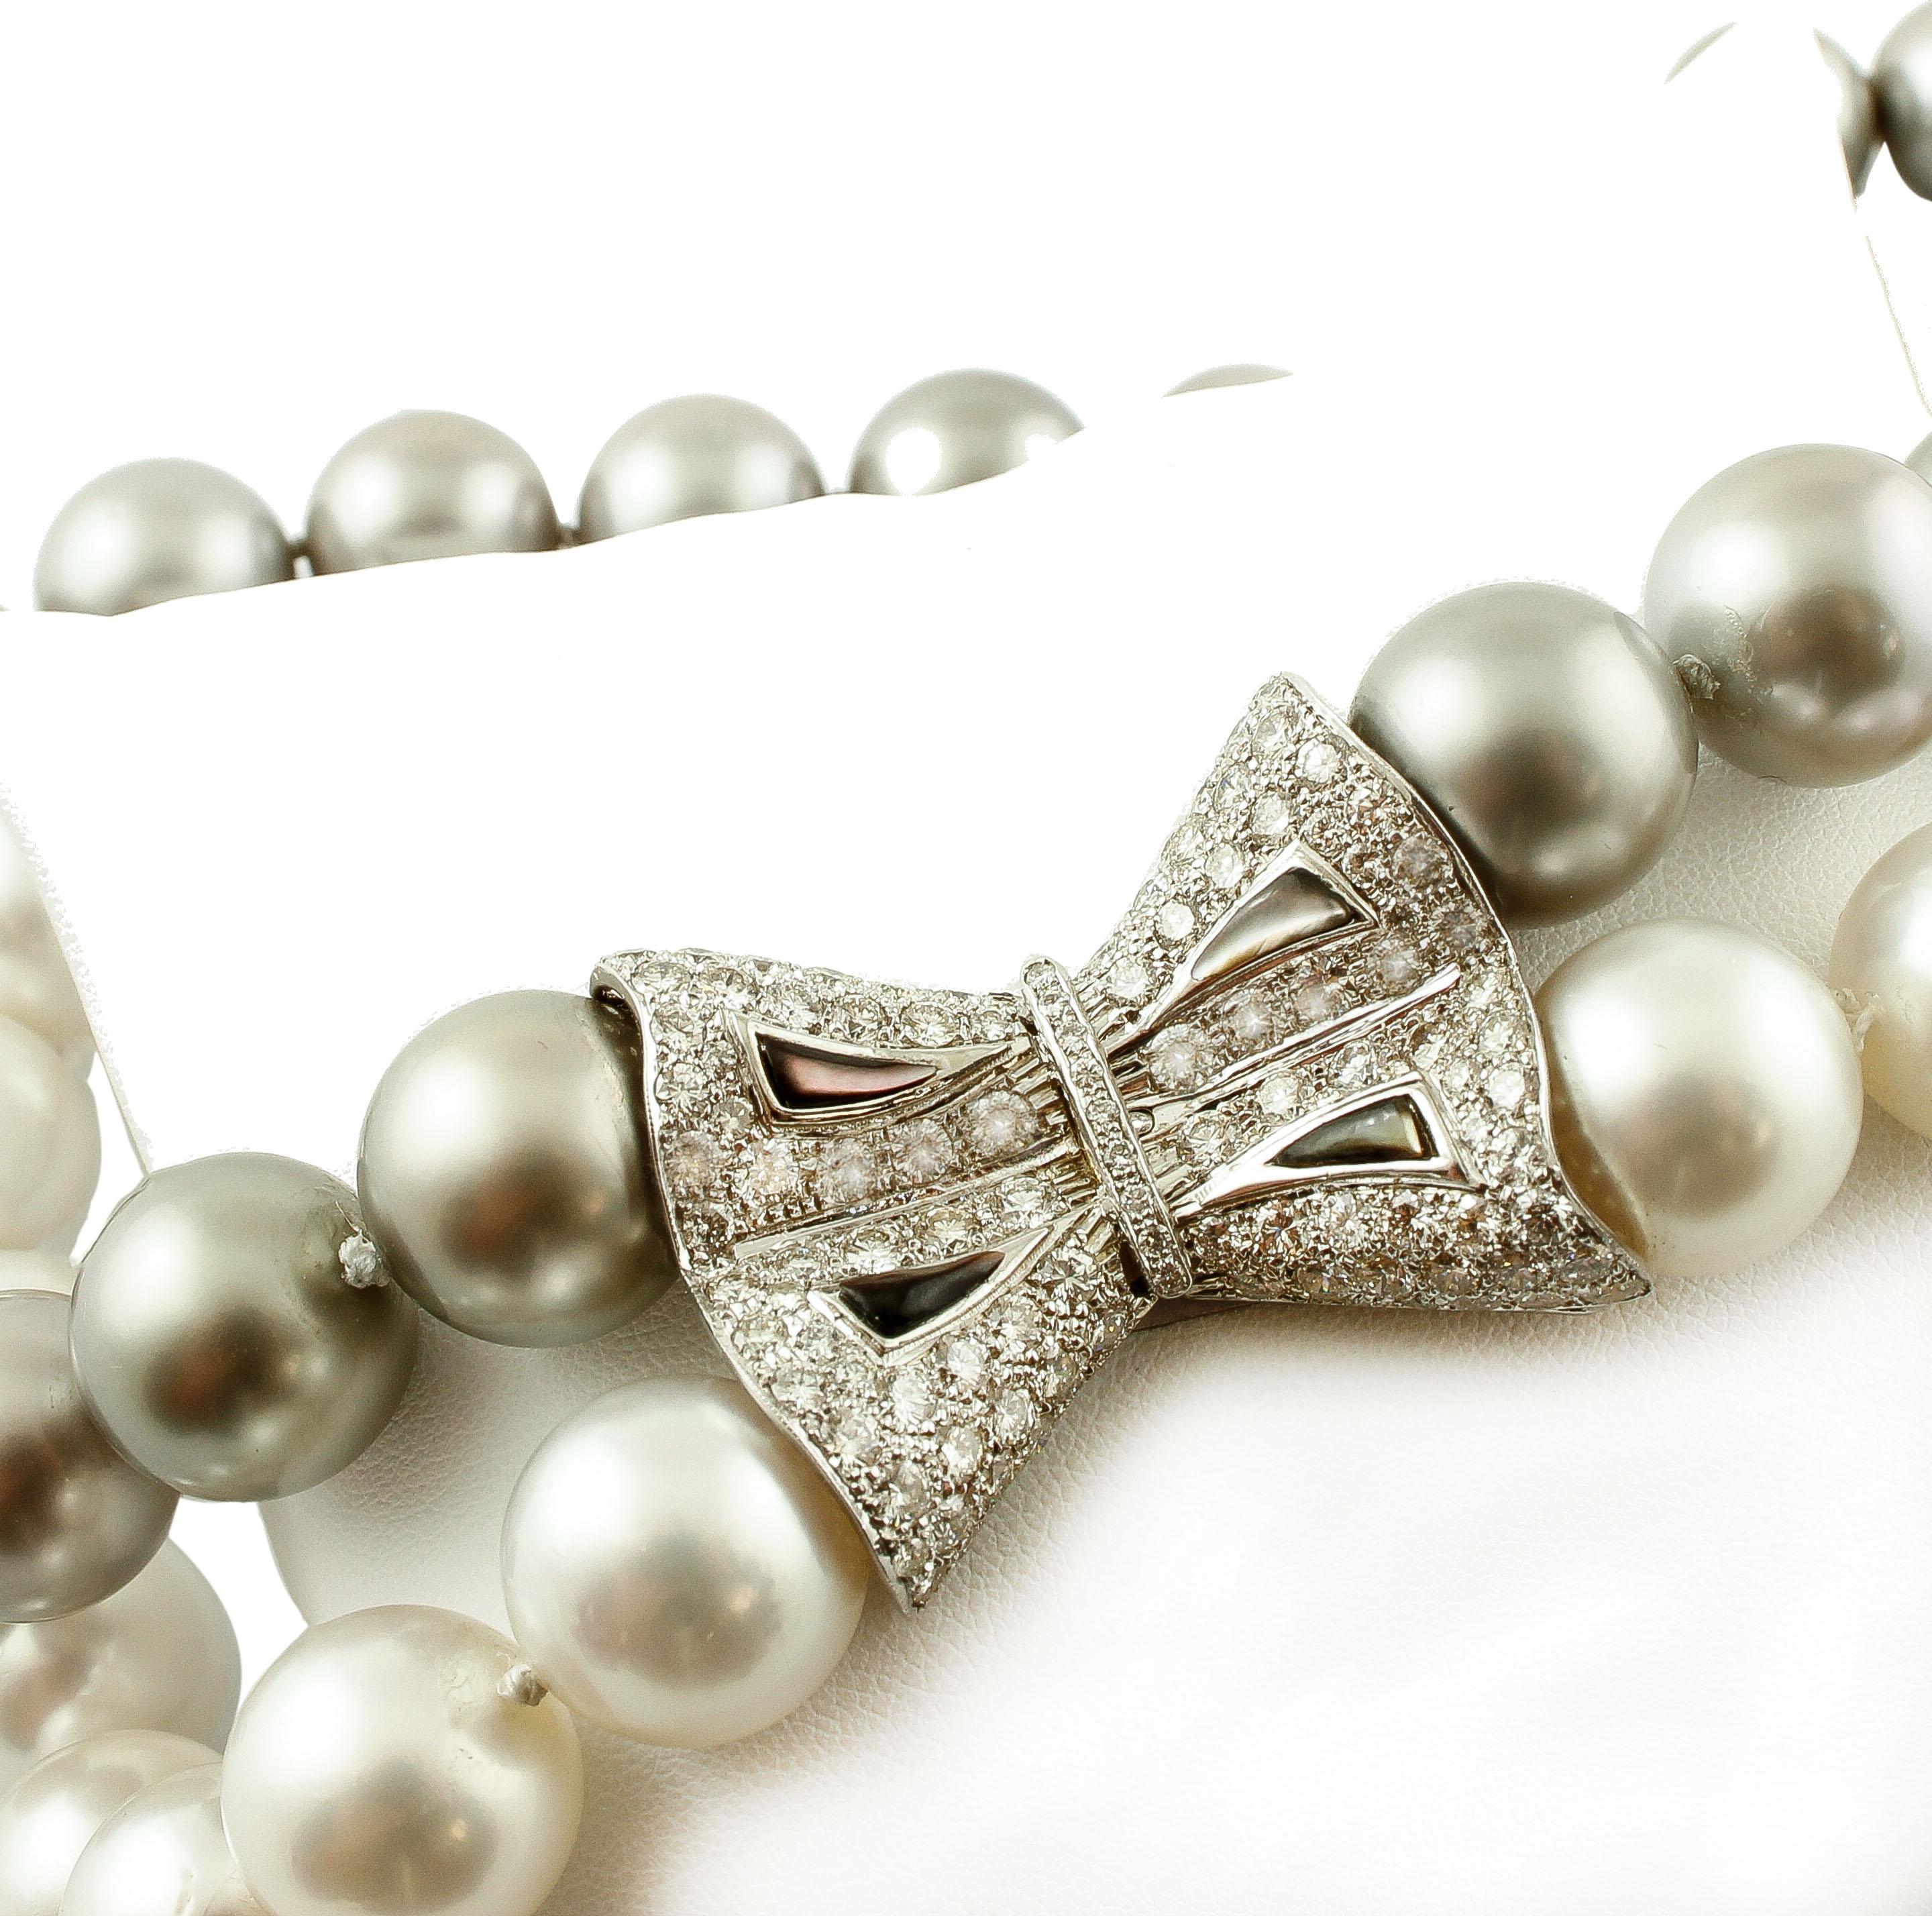 Brilliant Cut 121g White and Grey South Sea Pearls, Diamonds, 14 Karat White Gold Necklace